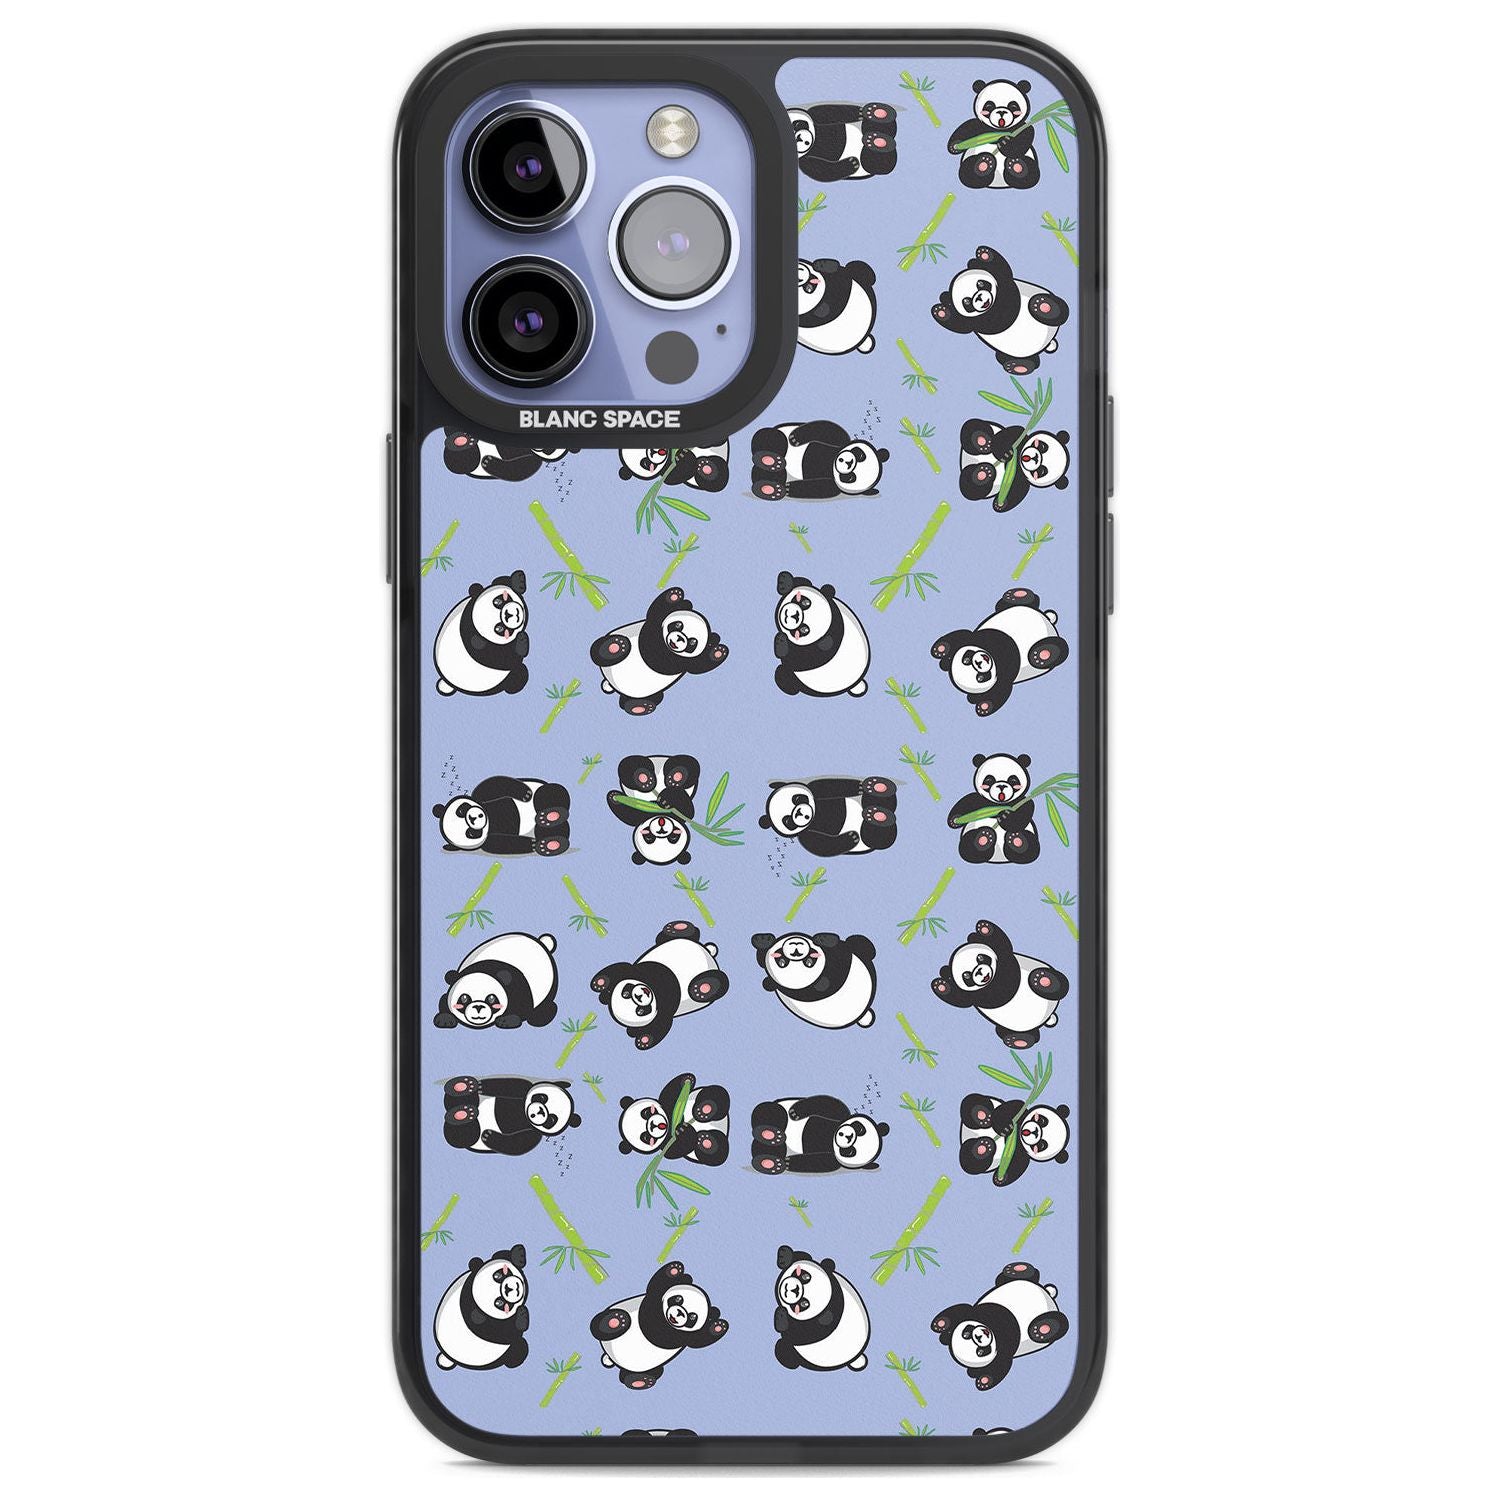 Panda Pattern Phone Case iPhone 14 Pro Max / Black Impact Case,iPhone 13 Pro Max / Black Impact Case Blanc Space